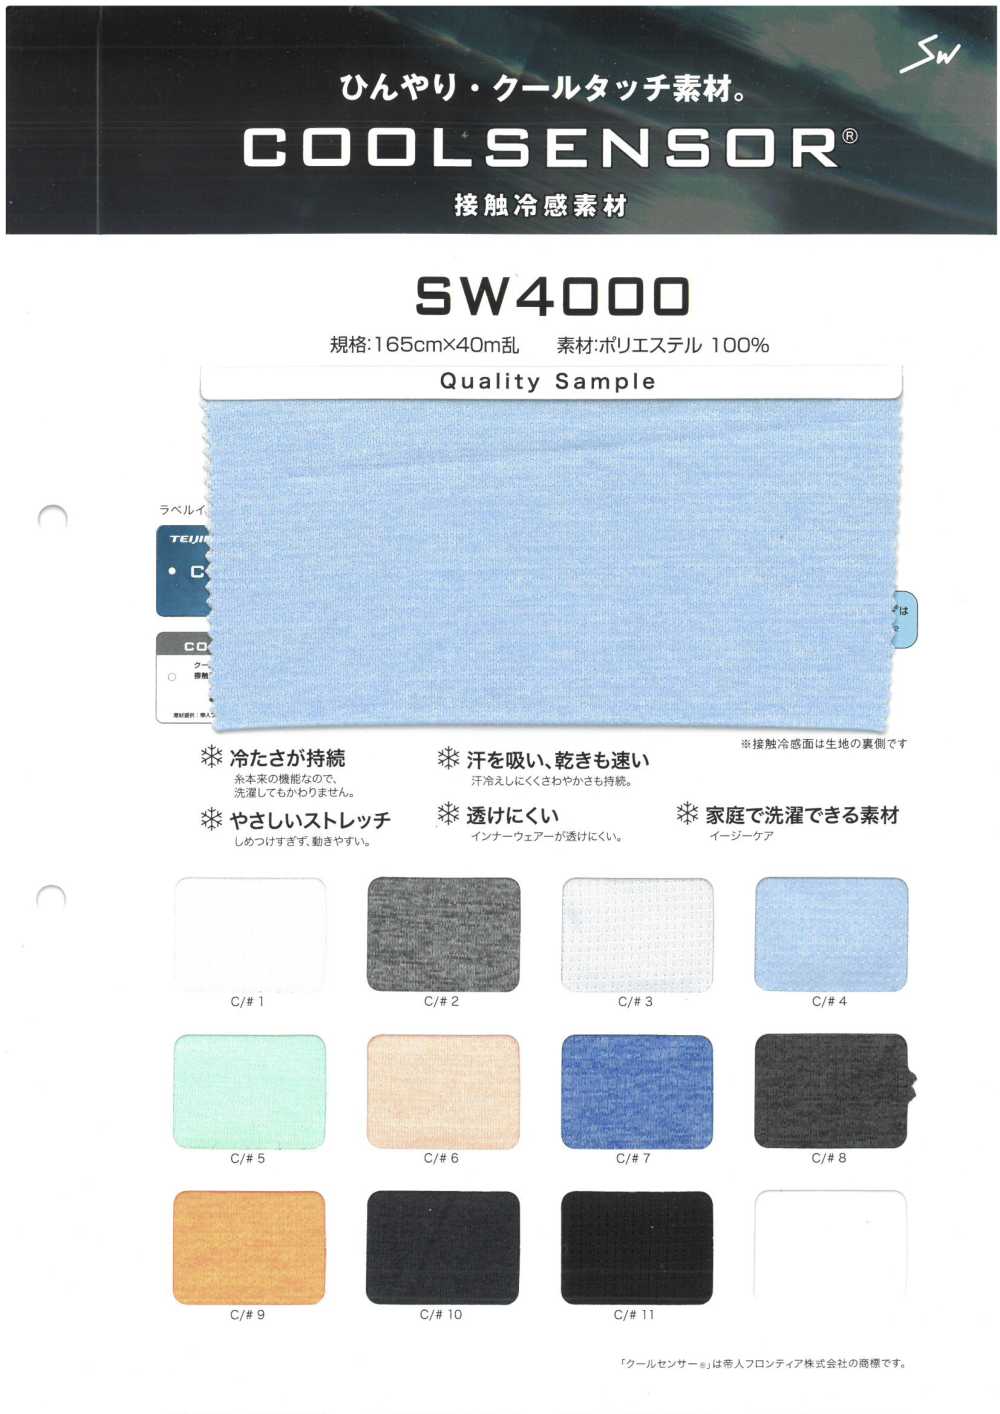 SW4000 Cảm Biến Mát Mẻ[Vải] Dệt May Sanwa